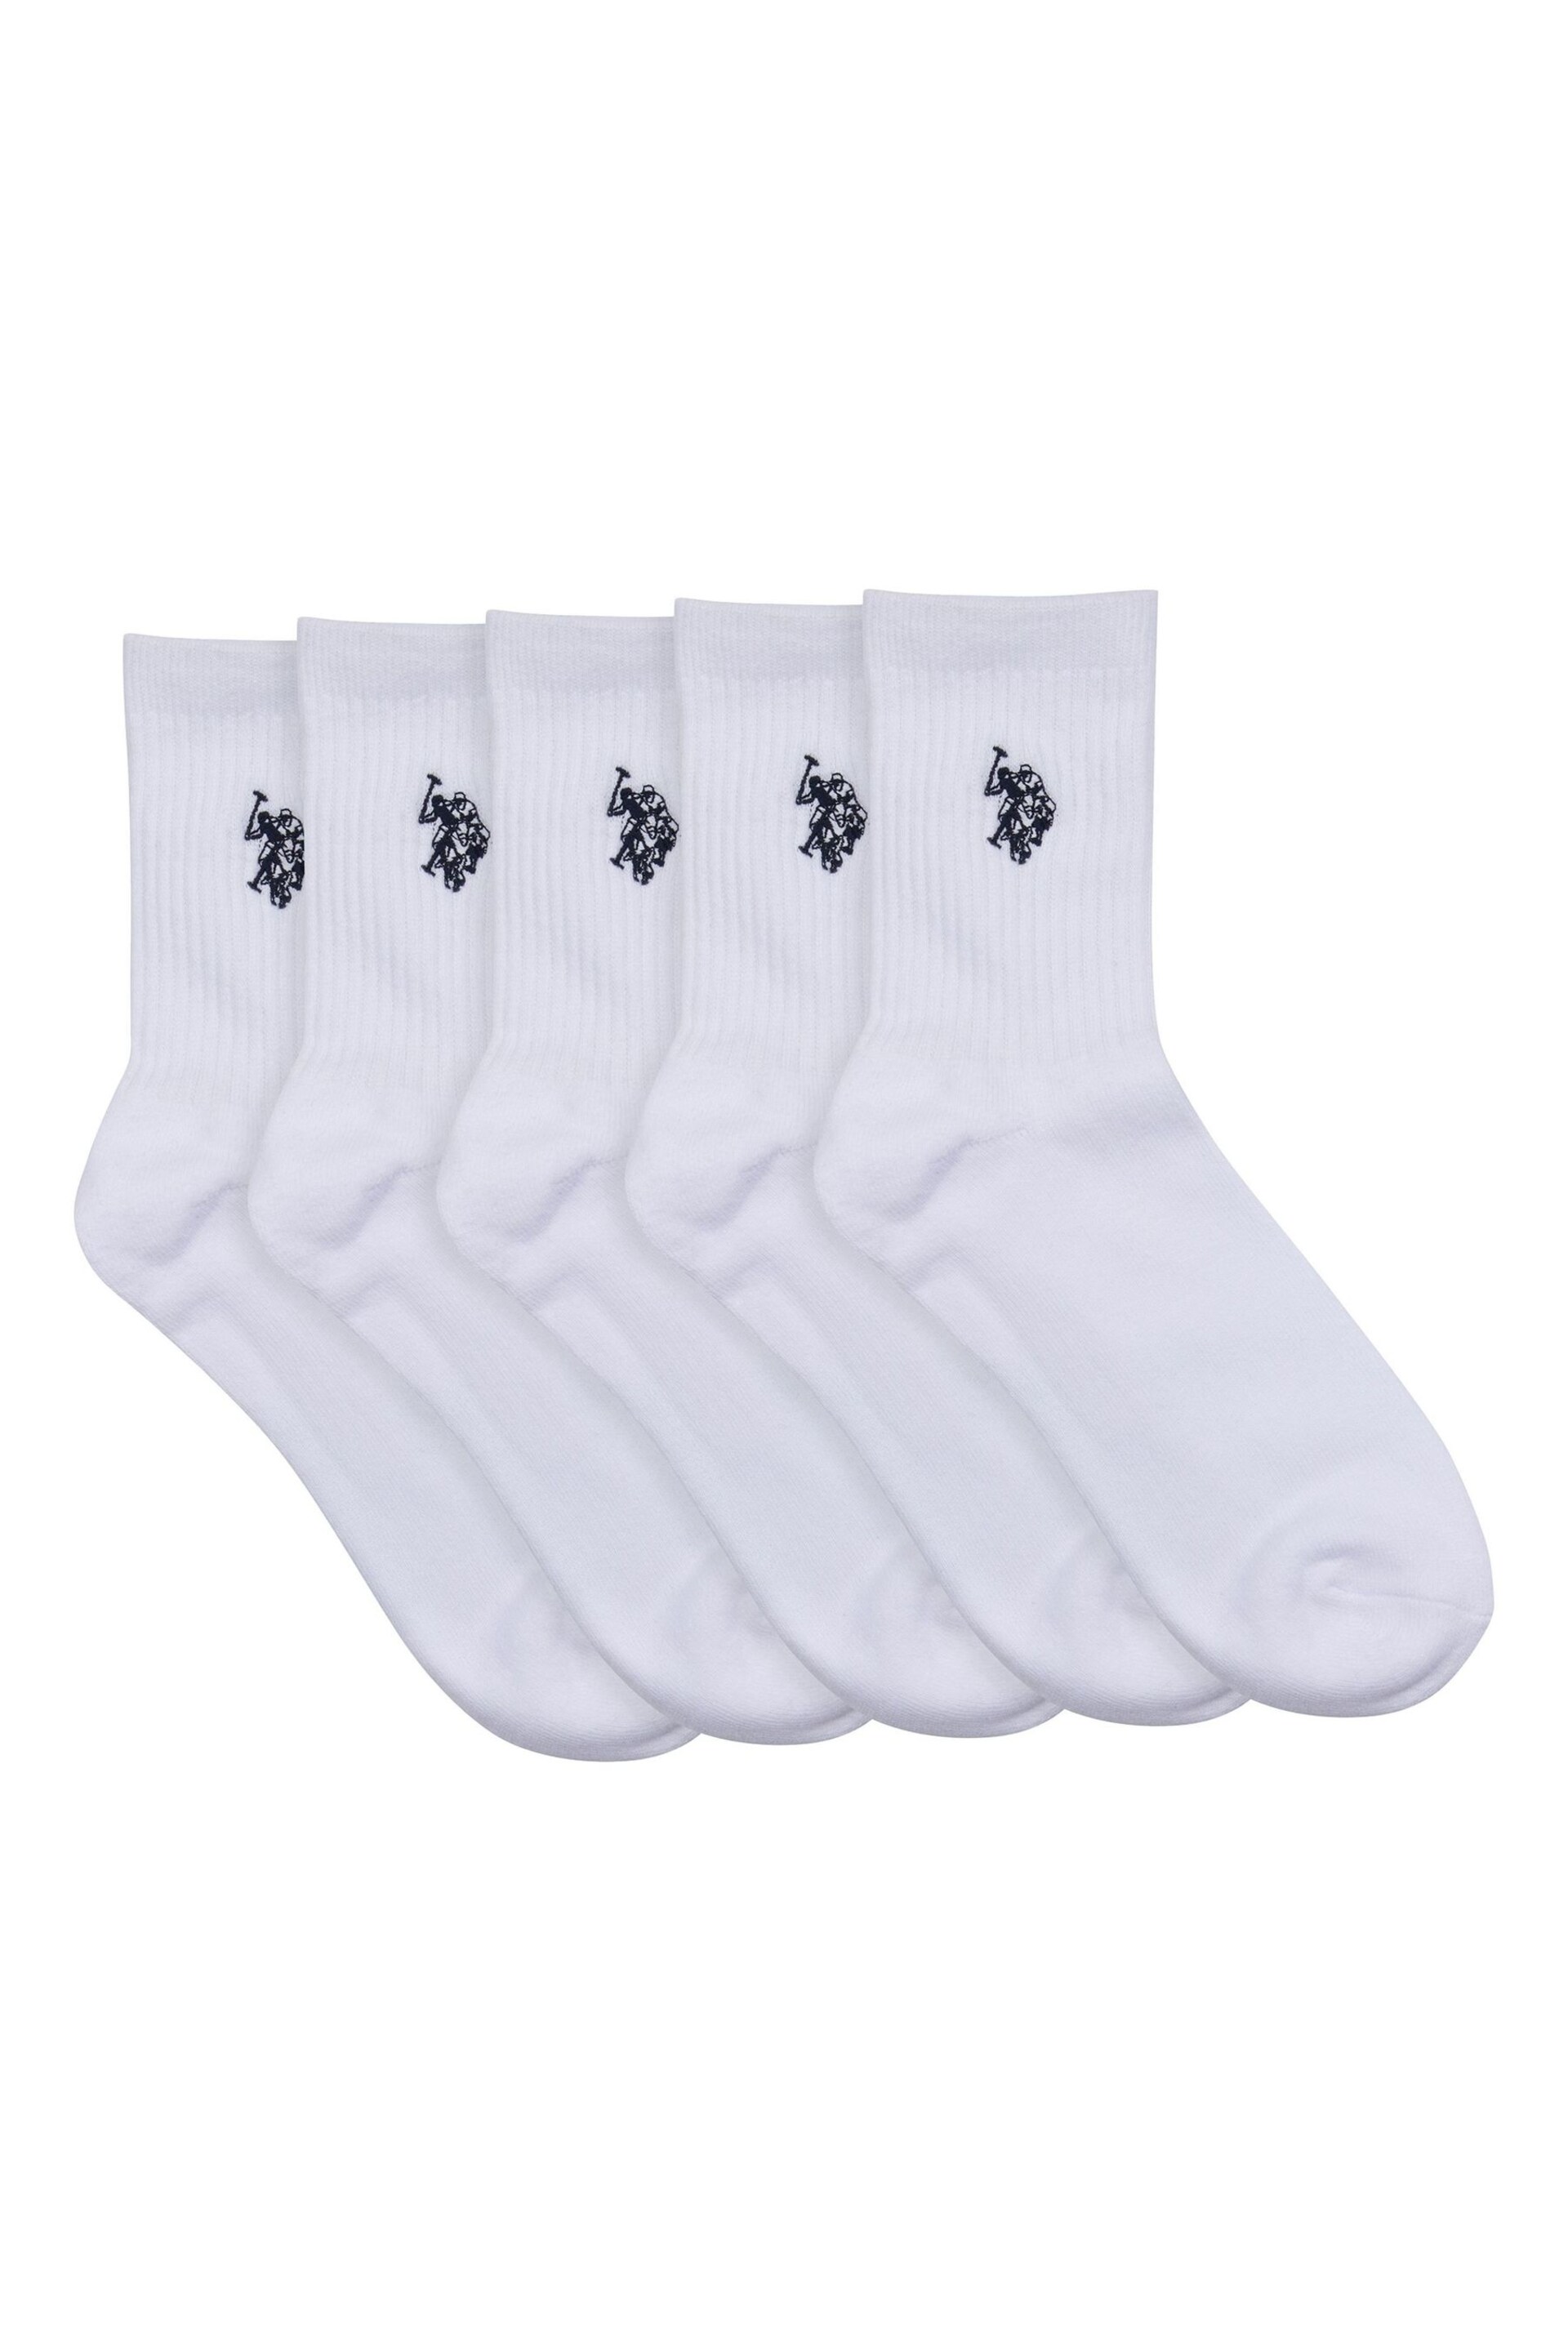 U.S. Polo Assn. Mens Quarter Sports White Socks 5 Pack - Image 1 of 3